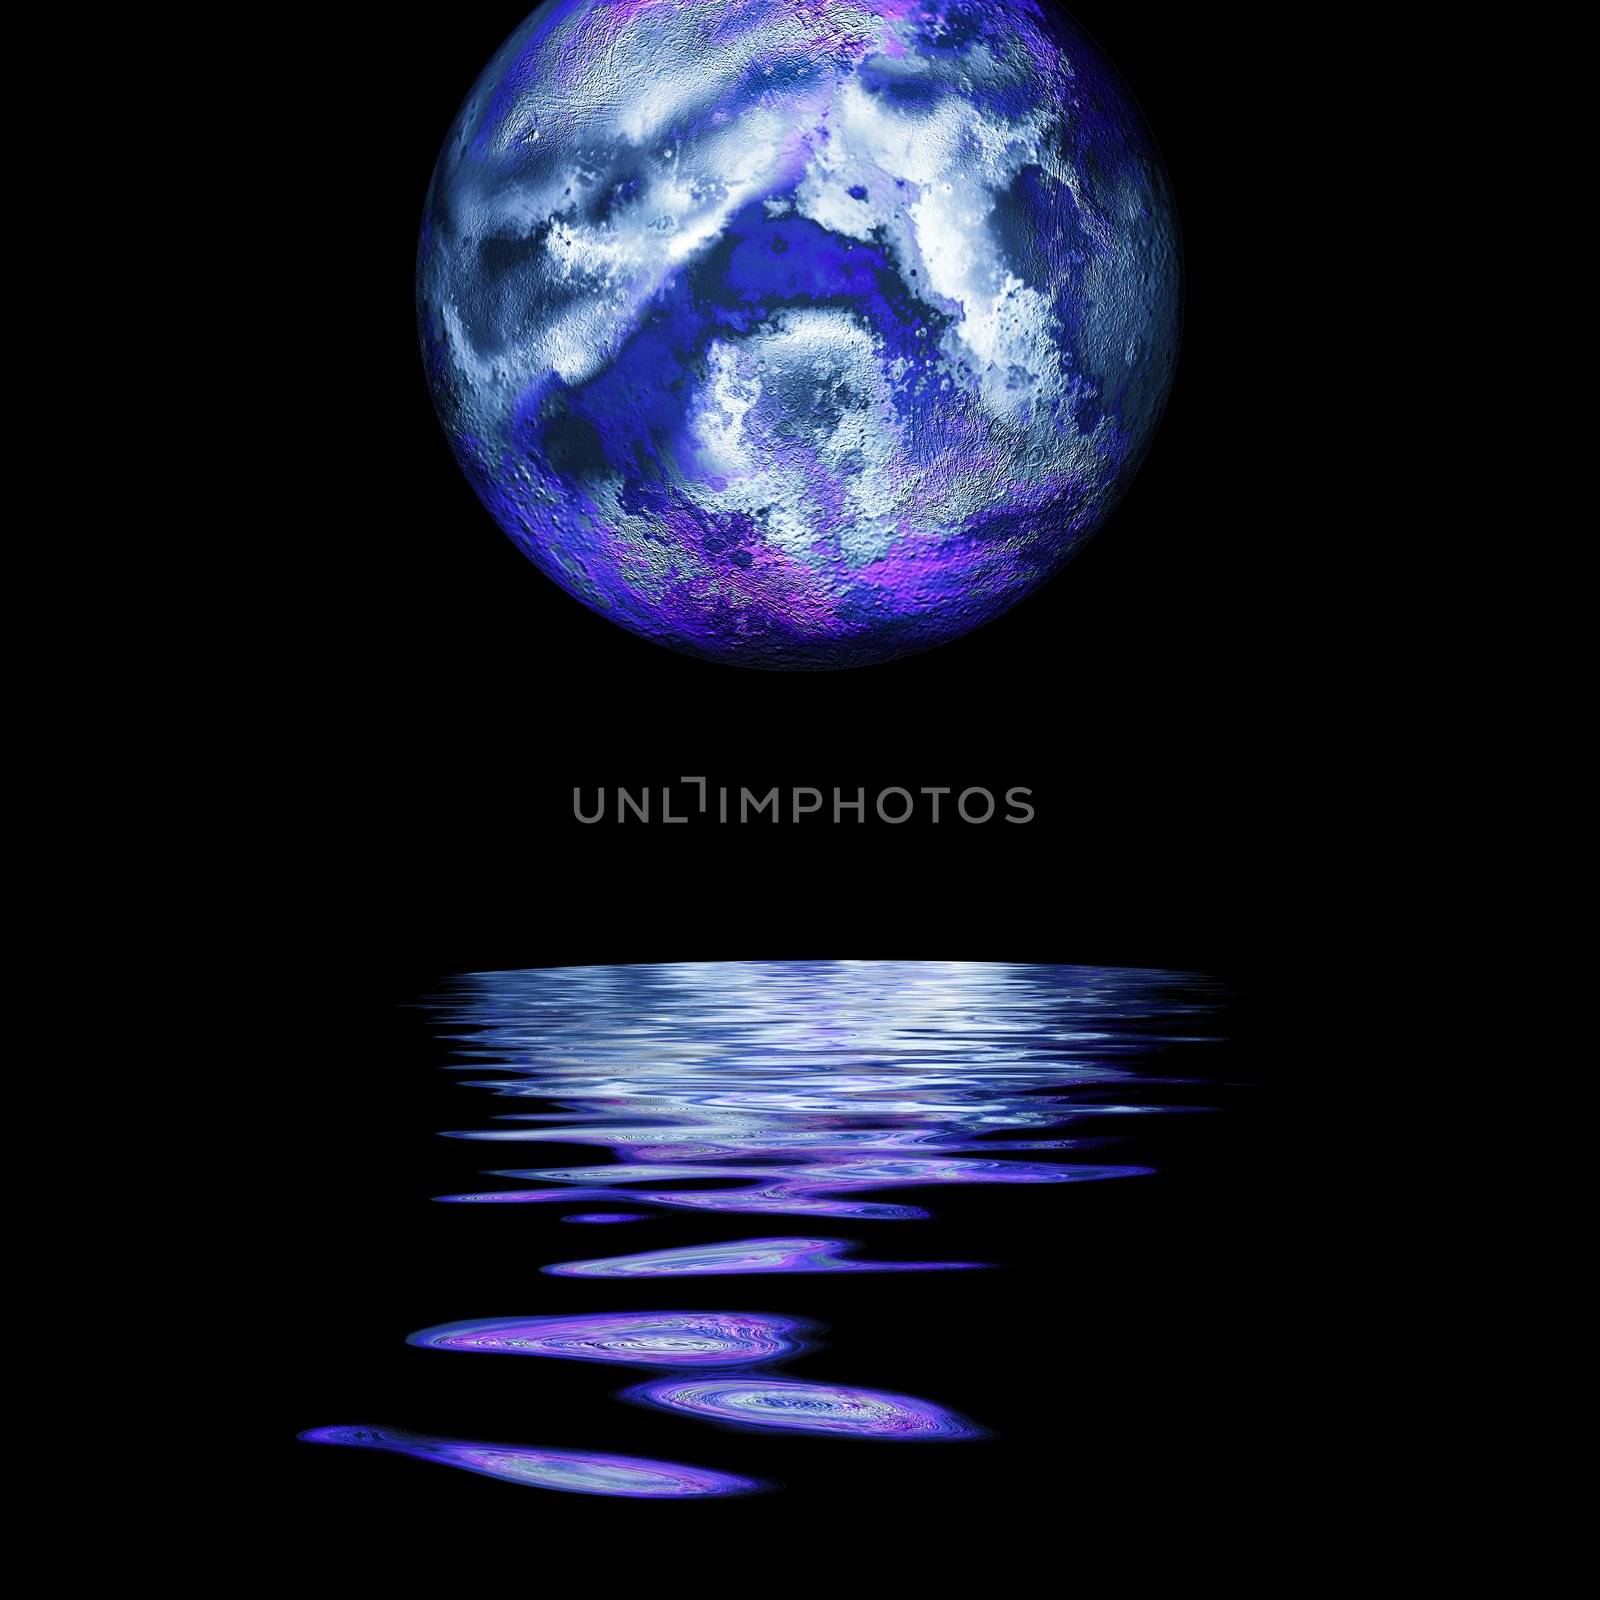 full moon rising by snokid